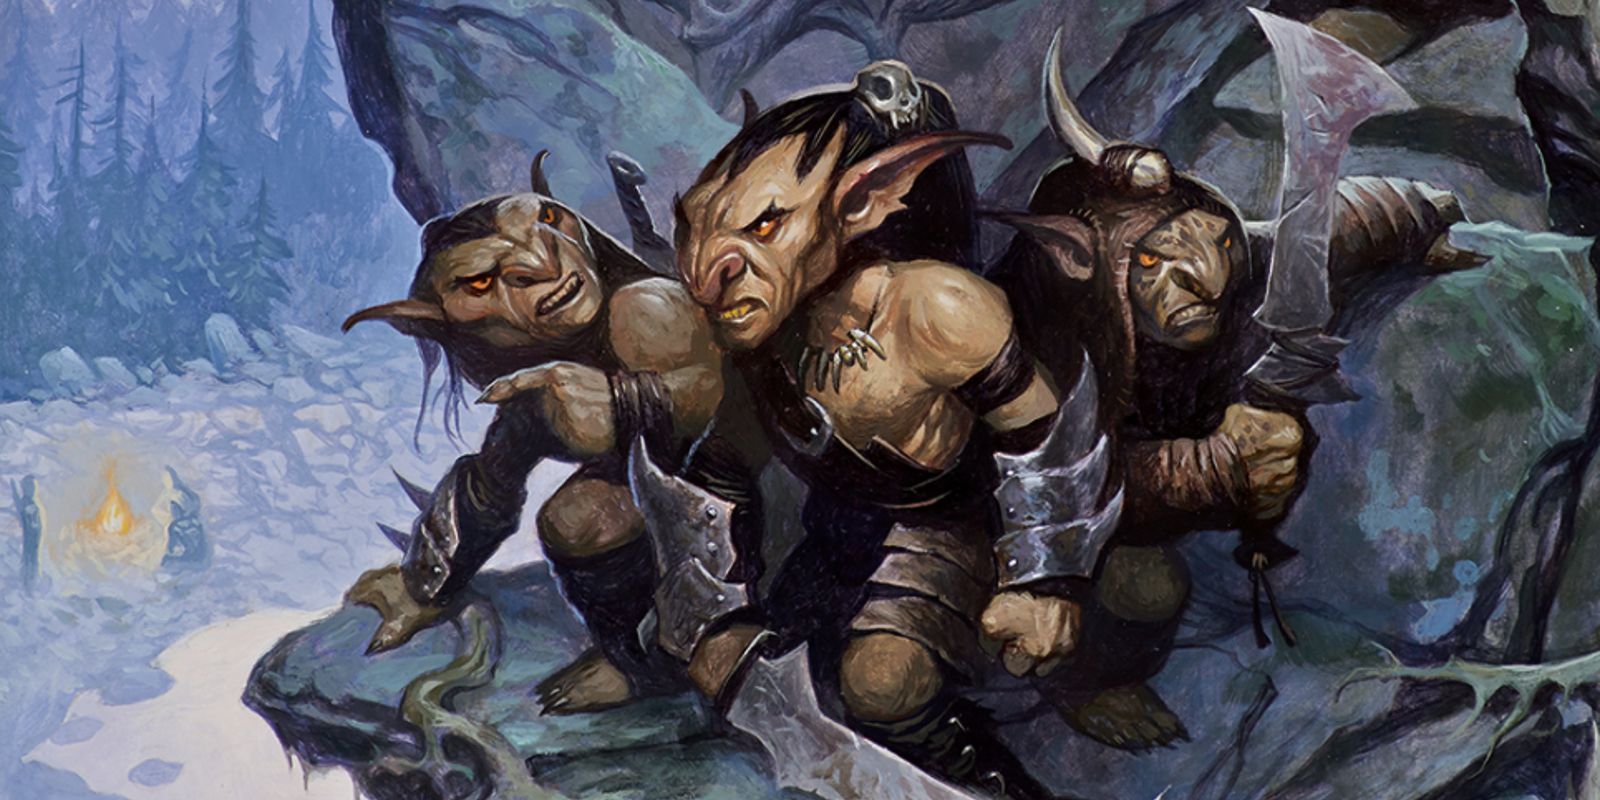 Para goblin D&D yang bergelantungan di tepi tebing memegang senjata mereka dan tampak marah